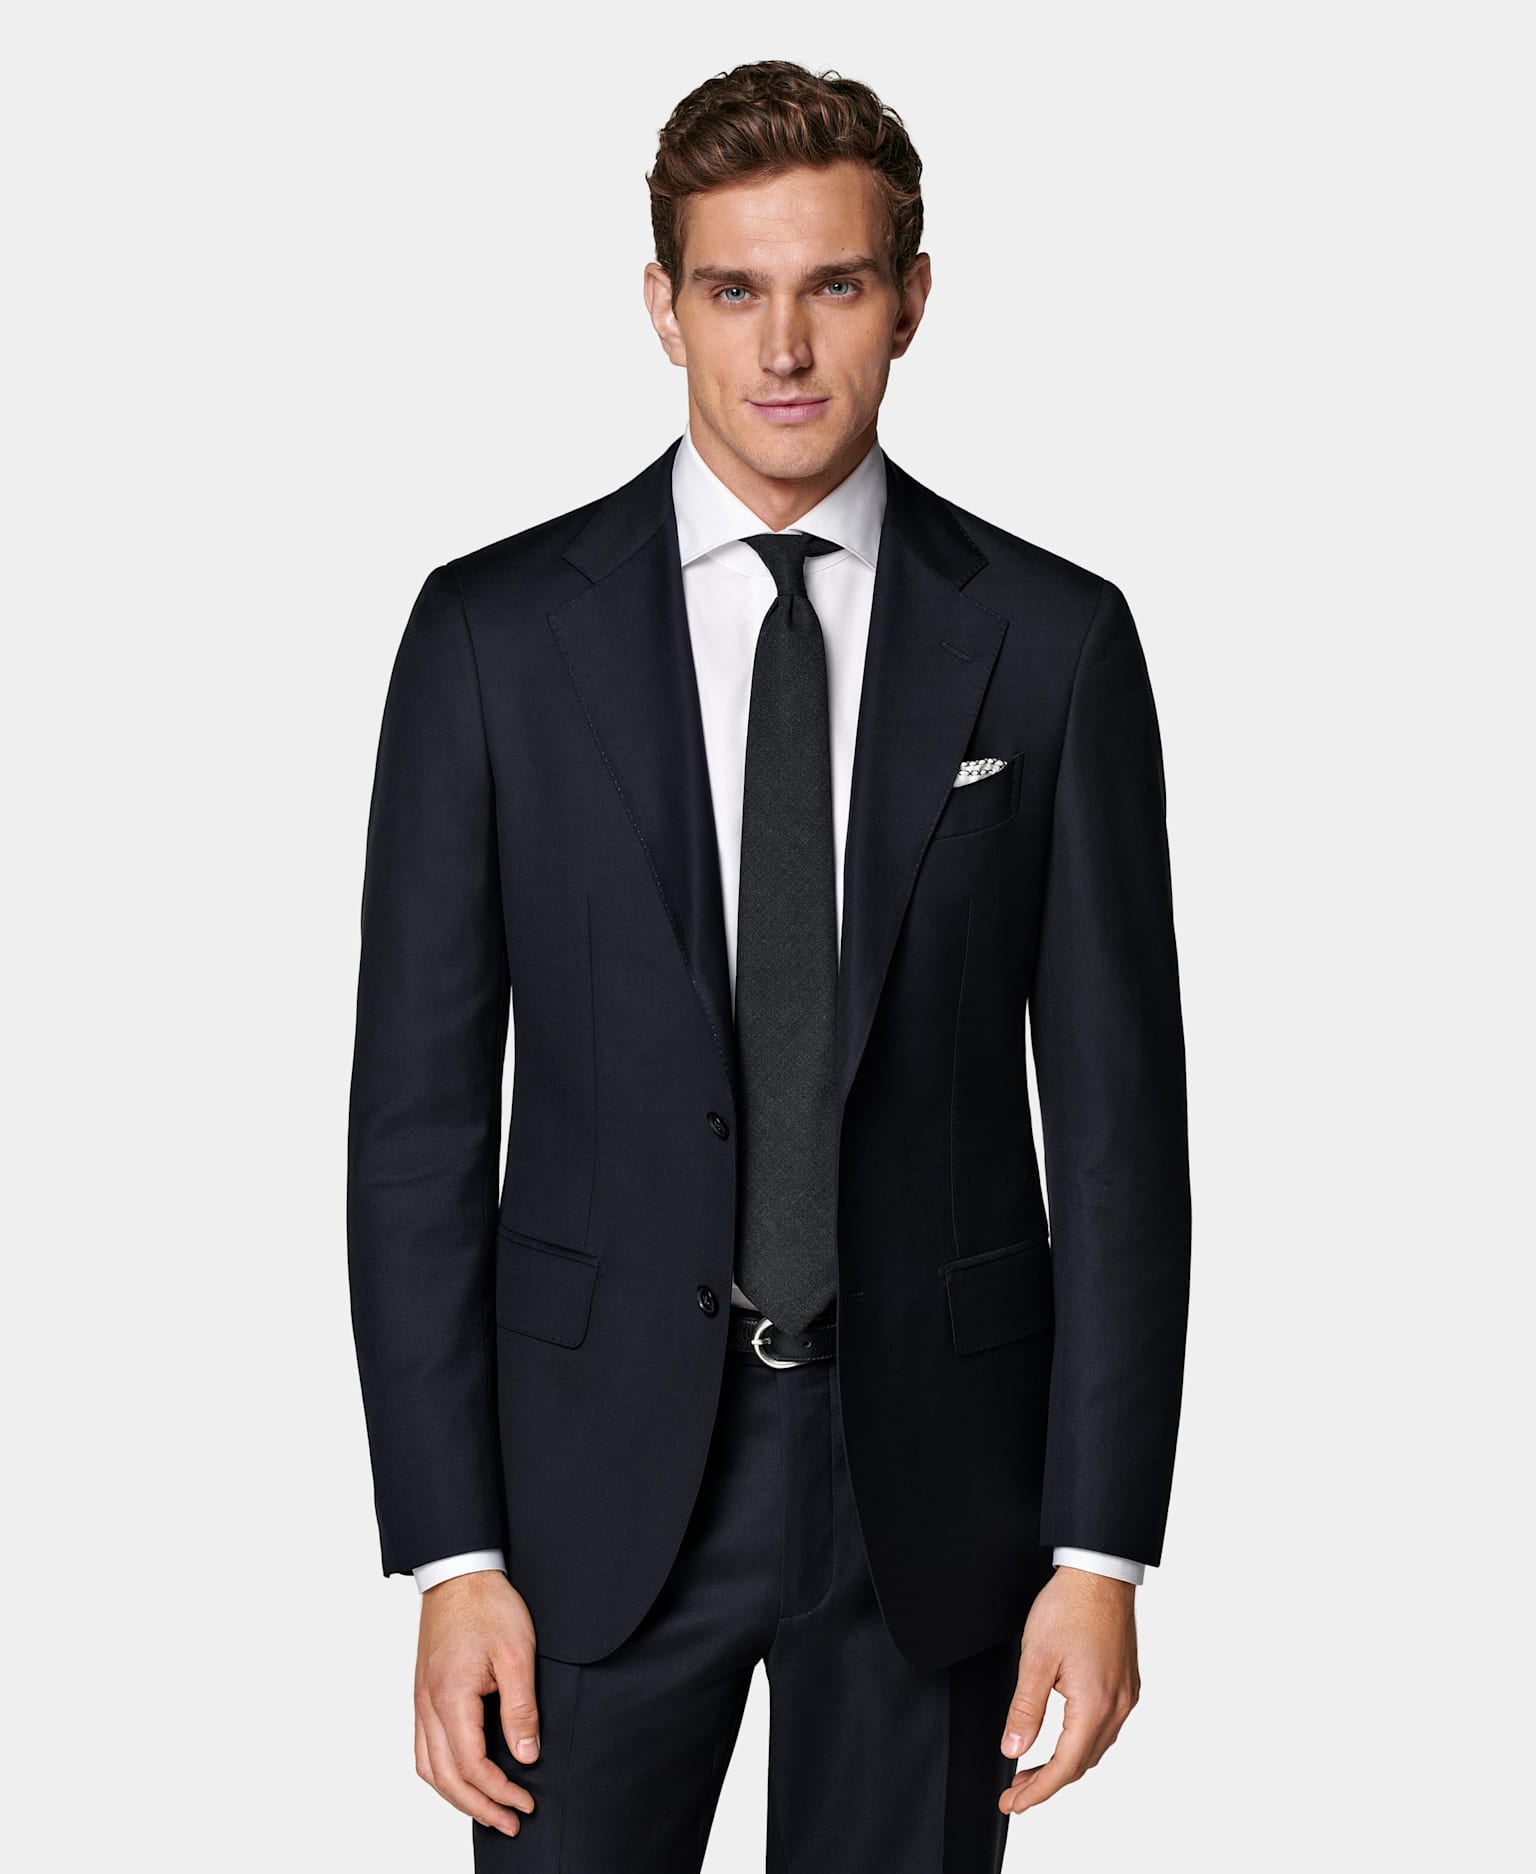 12 Dapper Black Suit & Black Shirt Outfits for Men - ATG